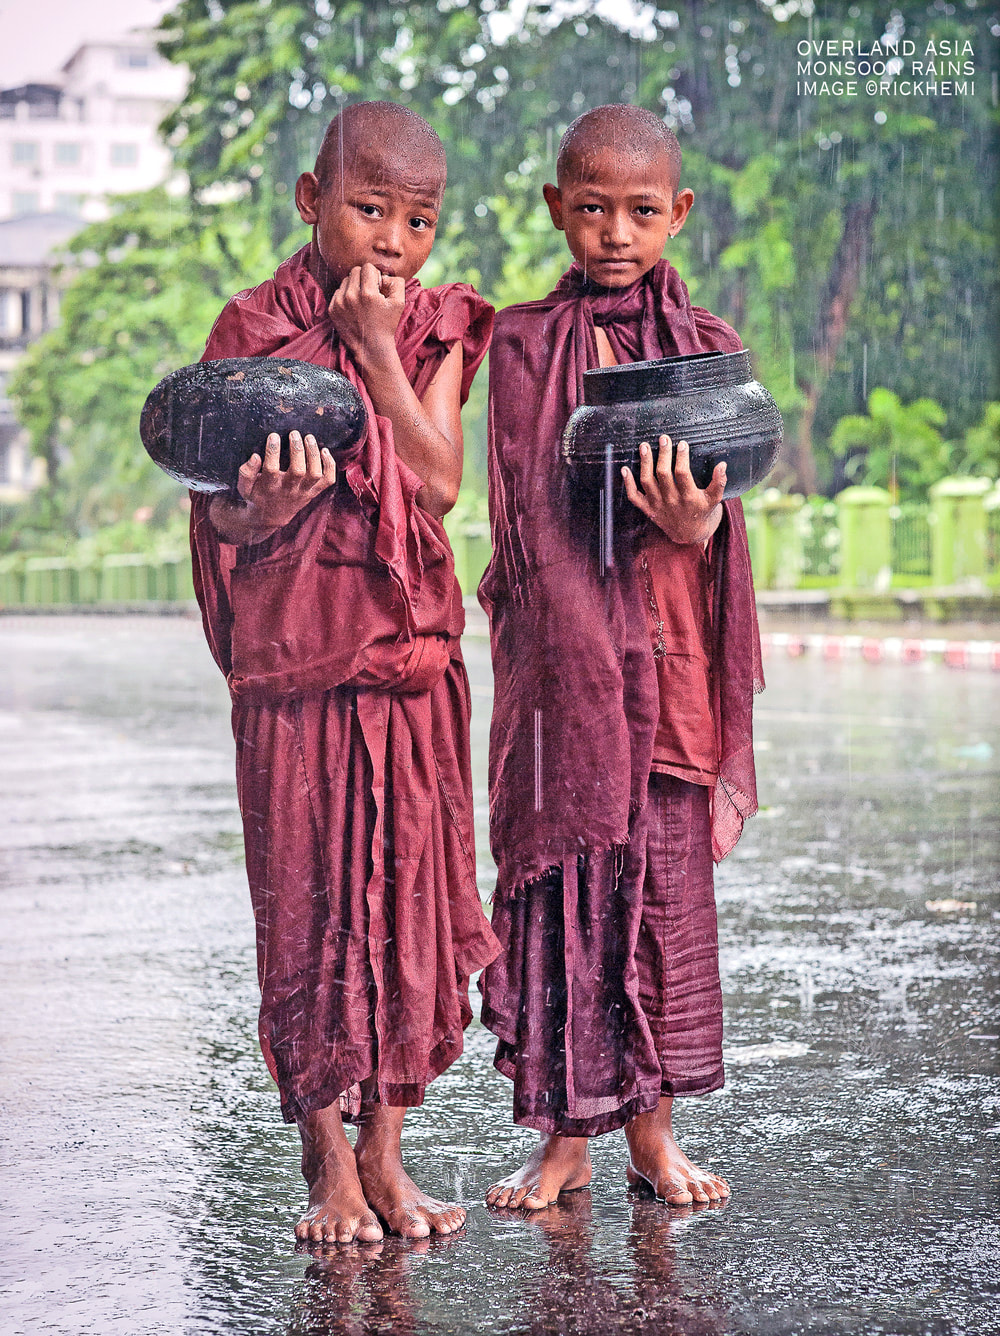 Asia overland travel, monsoon season, street photography Asia, image by Rick Hemi